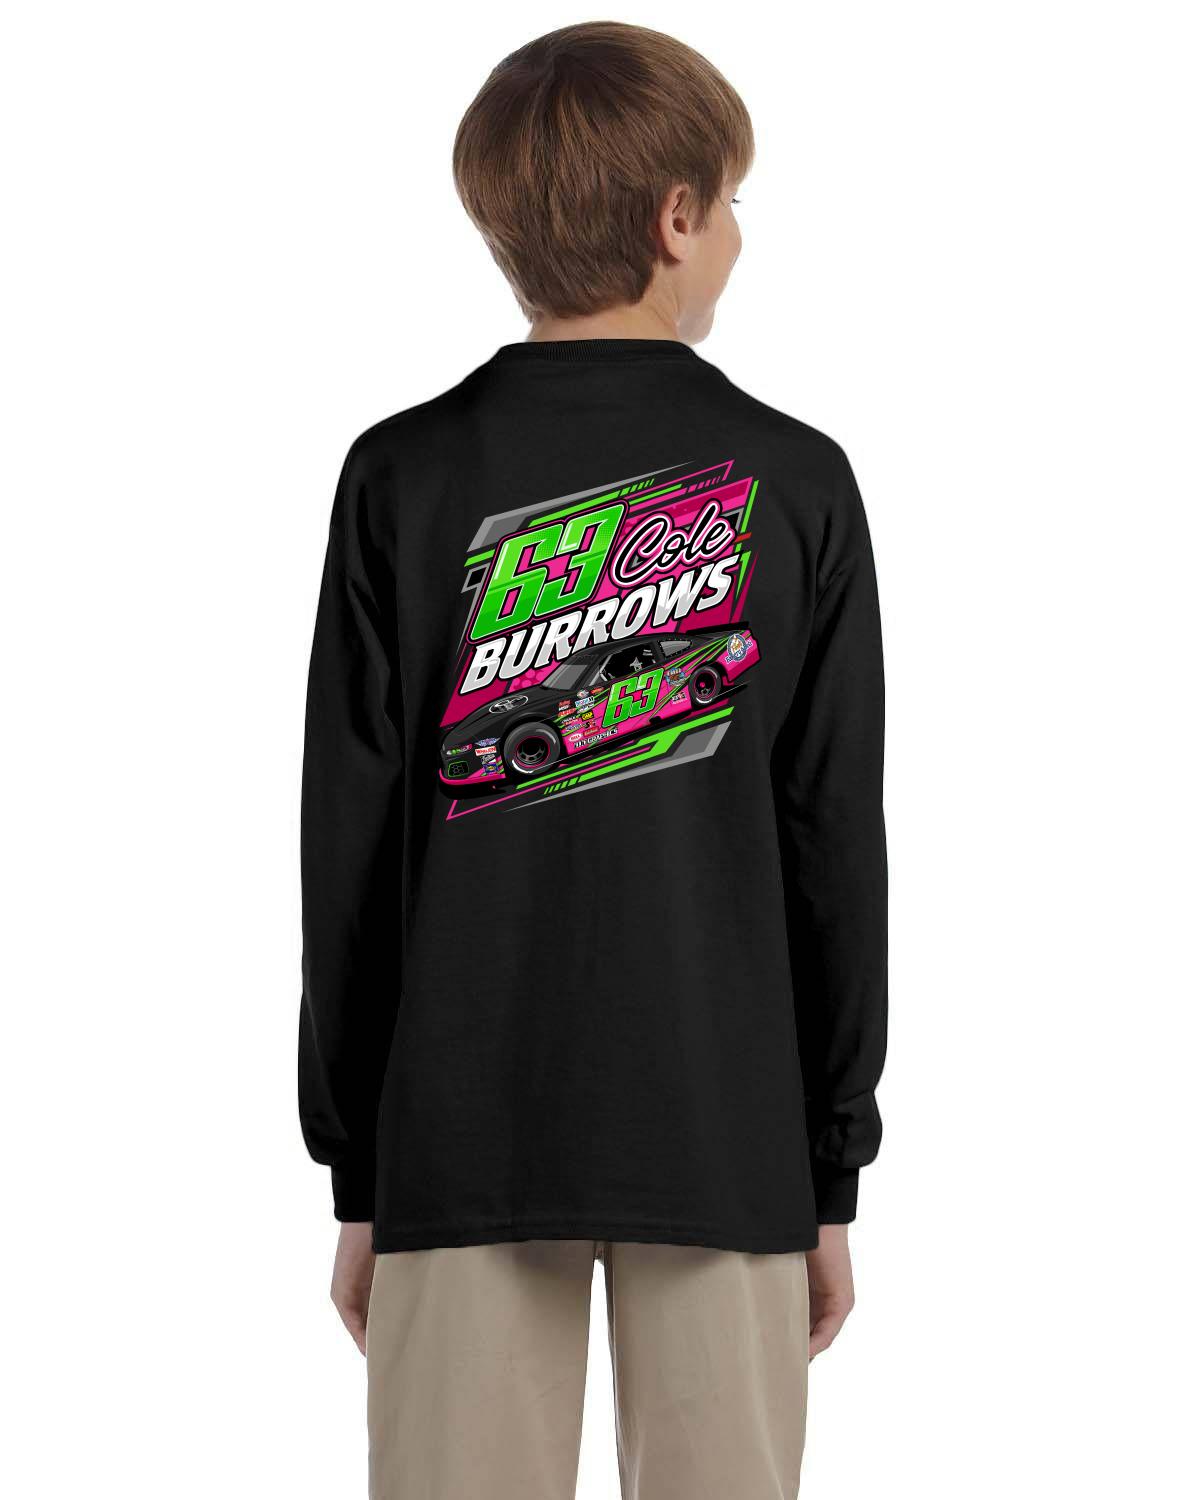 Cole Burrows Racing Youth Long-Sleeve T-Shirt